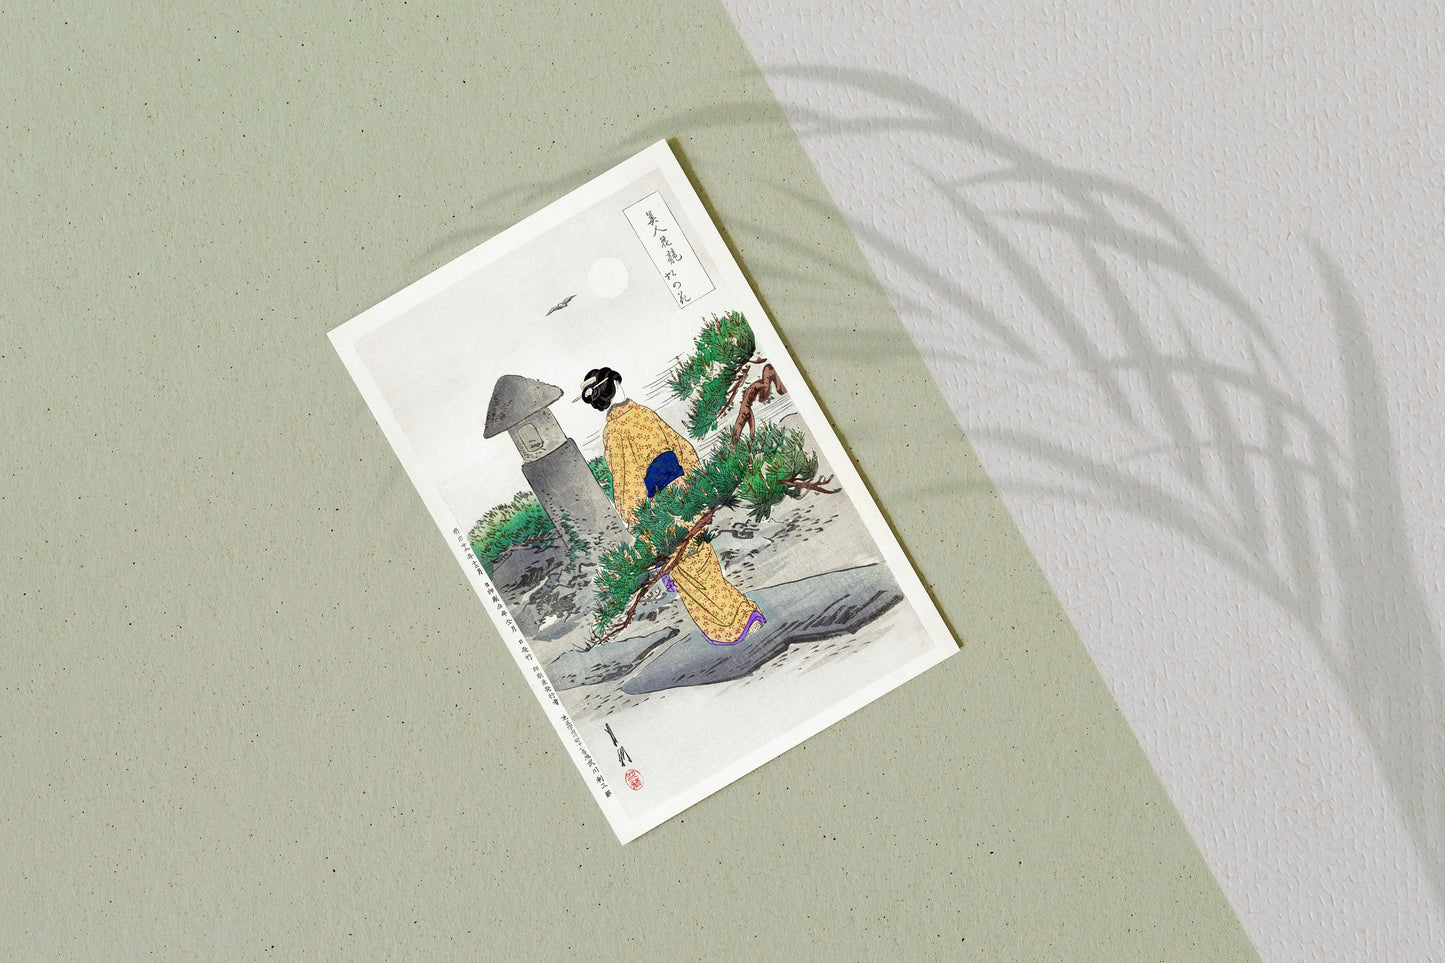 Full Moon and Pine Tree Kimono Japanese Art Poster Illustration Print Wall Hanging Decor